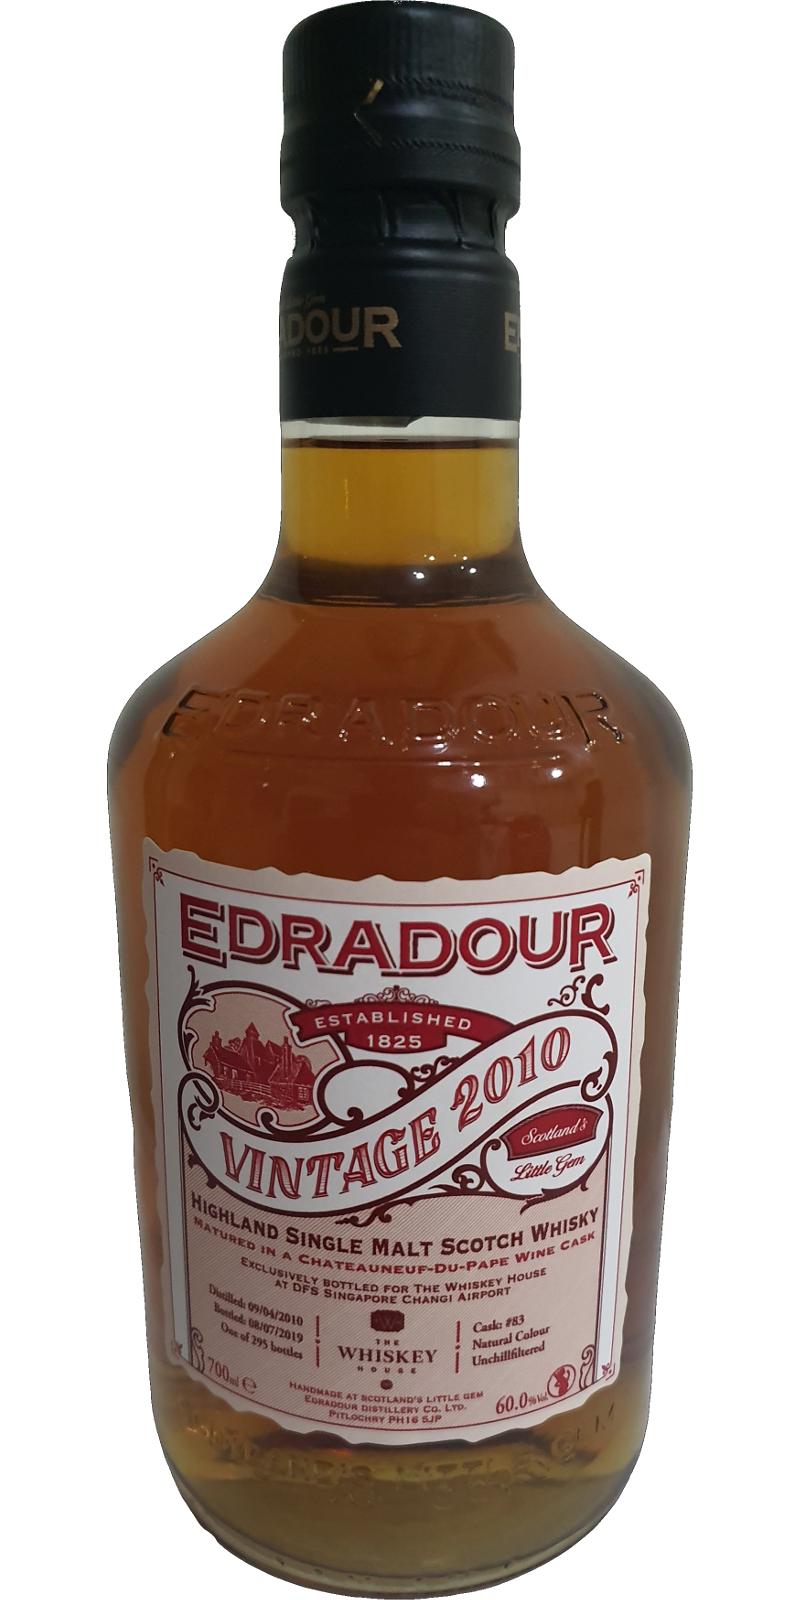 Edradour 2010 Vintage Chateauneuf-du-Pape Cask Matured #83 60% 700ml